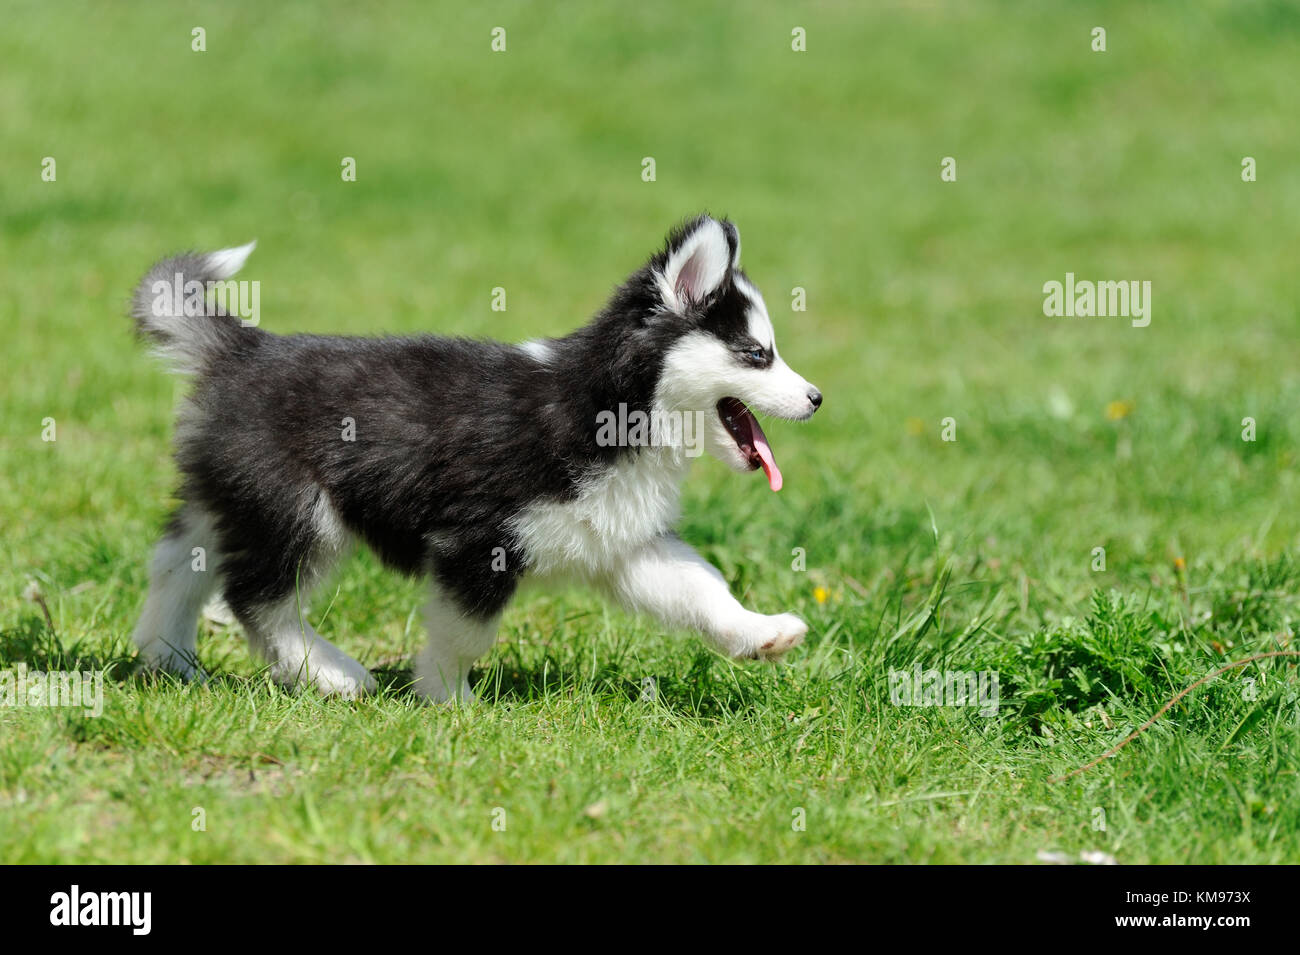 Cute little siberian husky puppy in grass Stock Photo - Alamy